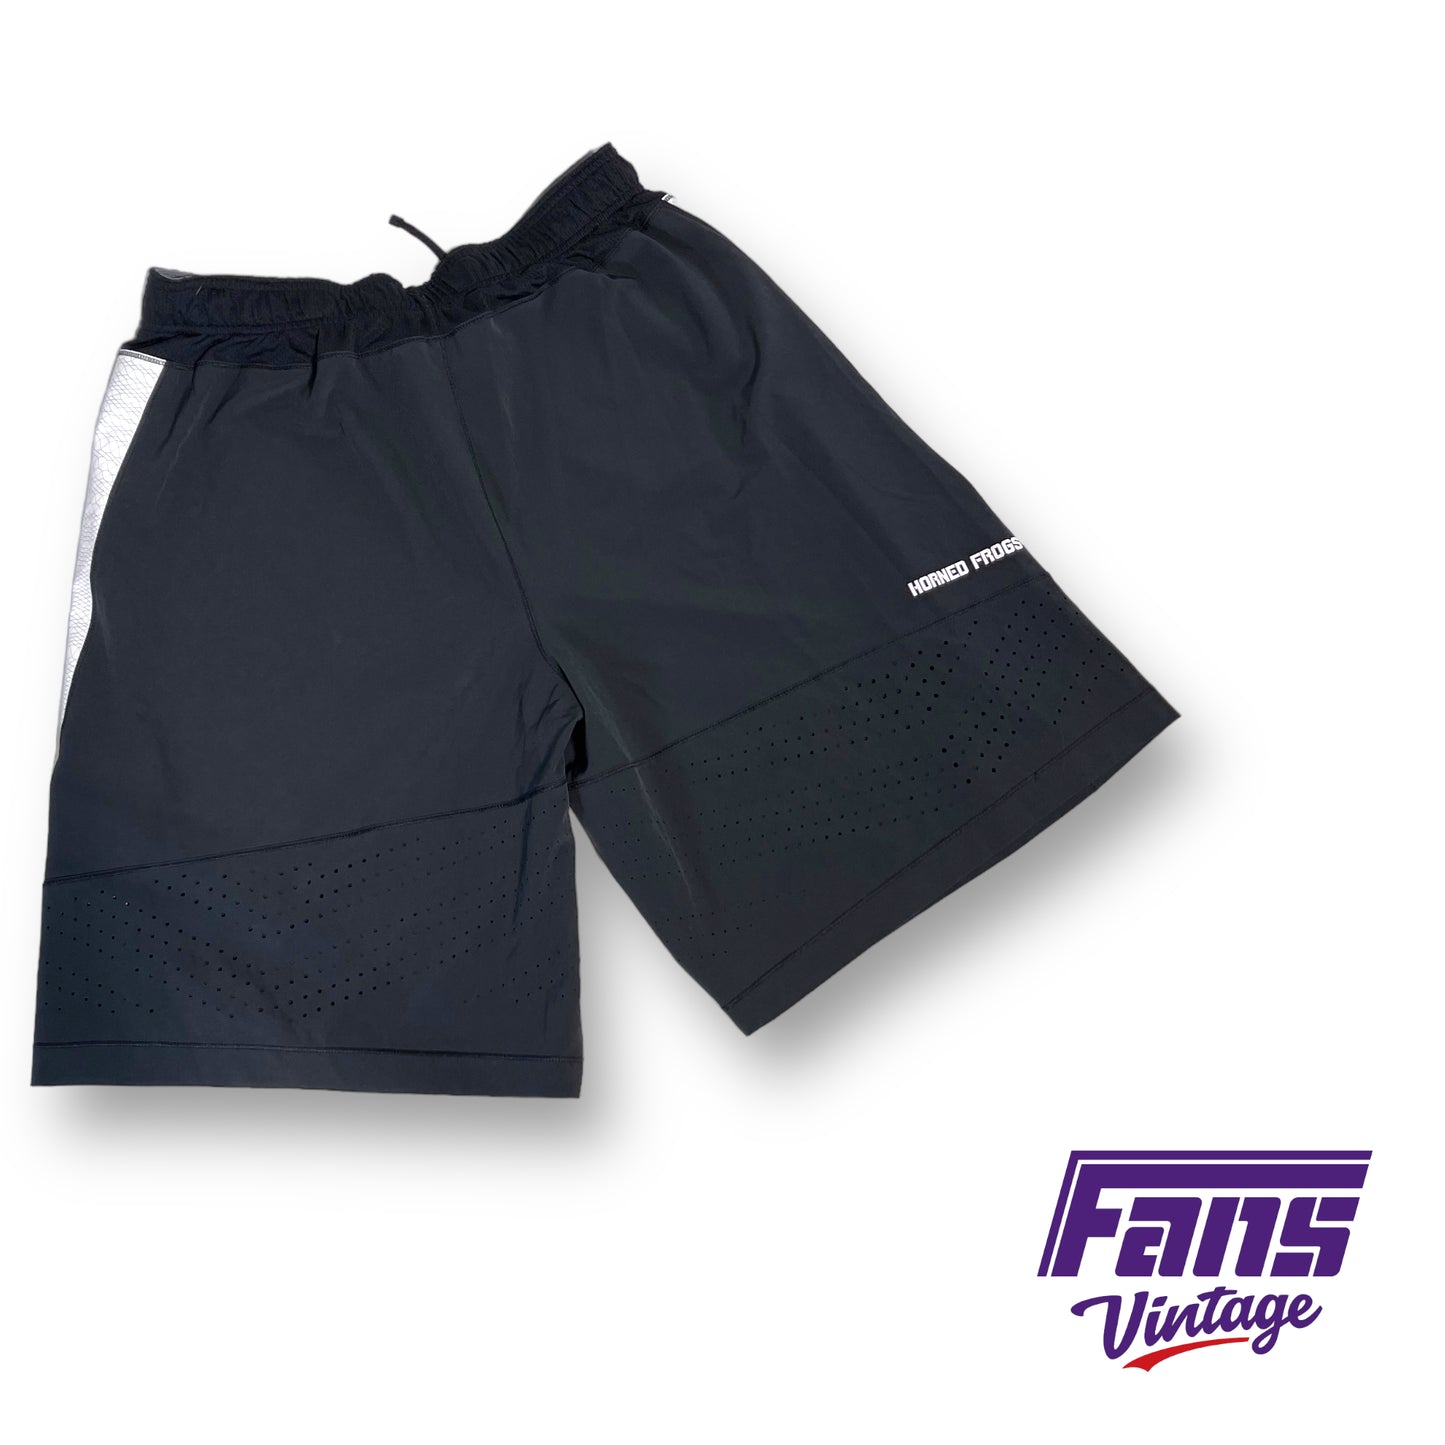 Nike TCU team issued dri-fit shorts